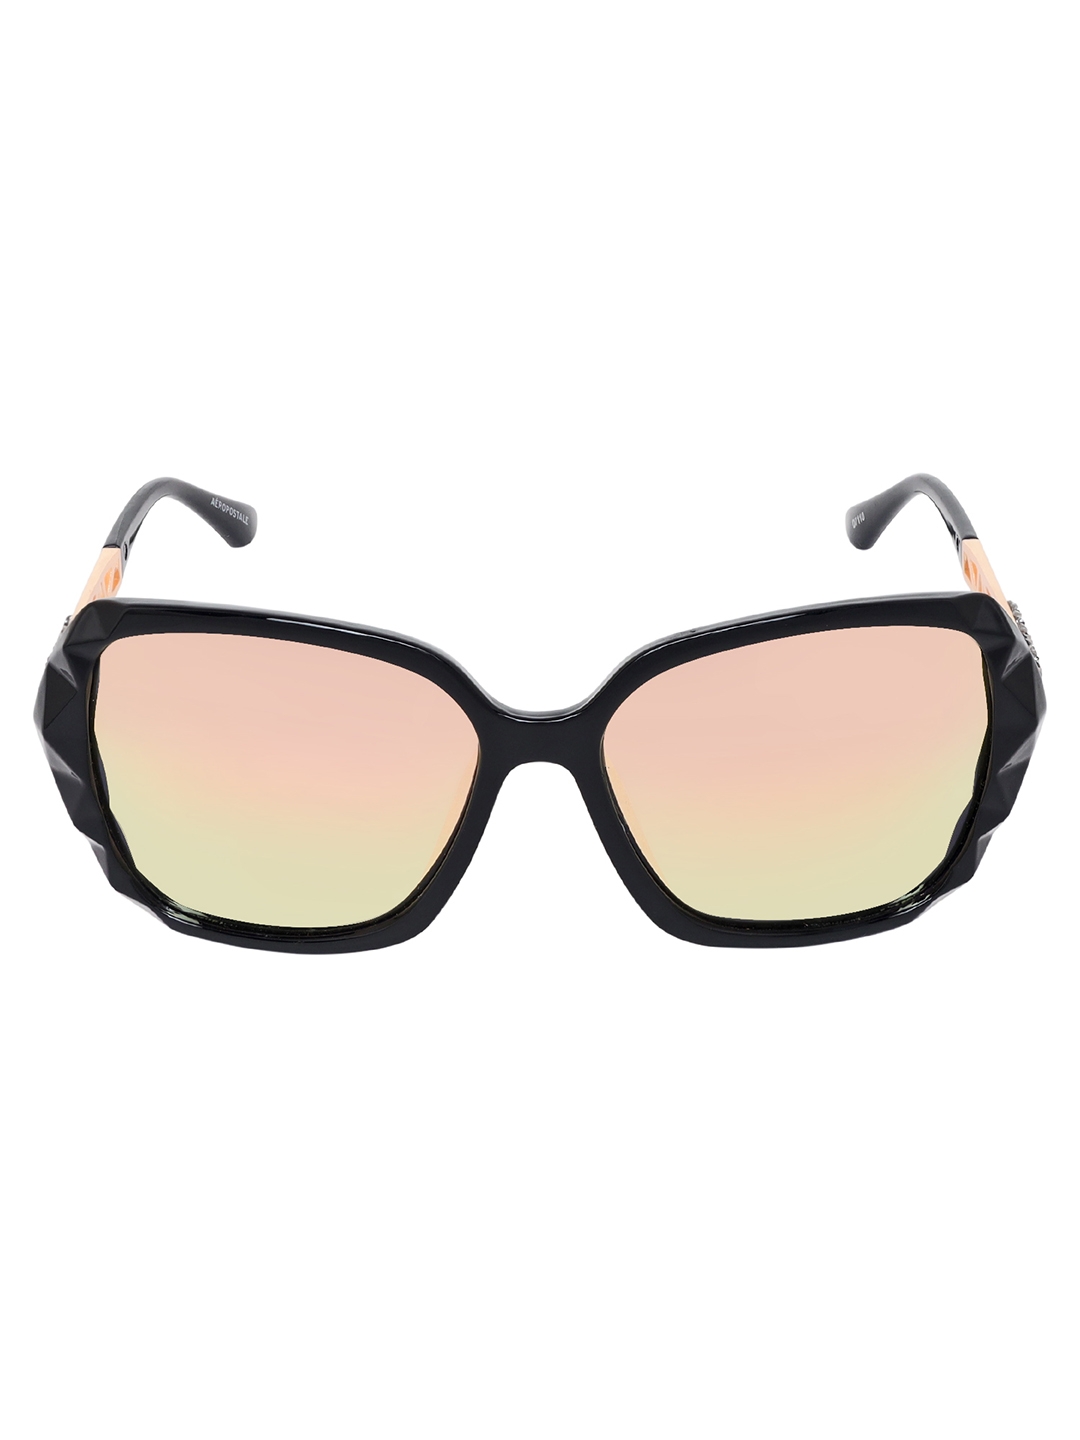 Aeropostale | Aeropostale AERO_SUN_2538_C5 Summer Sun Glasses with UV protection Polarized Anti Glare Summer Style Golden Reflective Lenses with Black wide Acrylic Frame